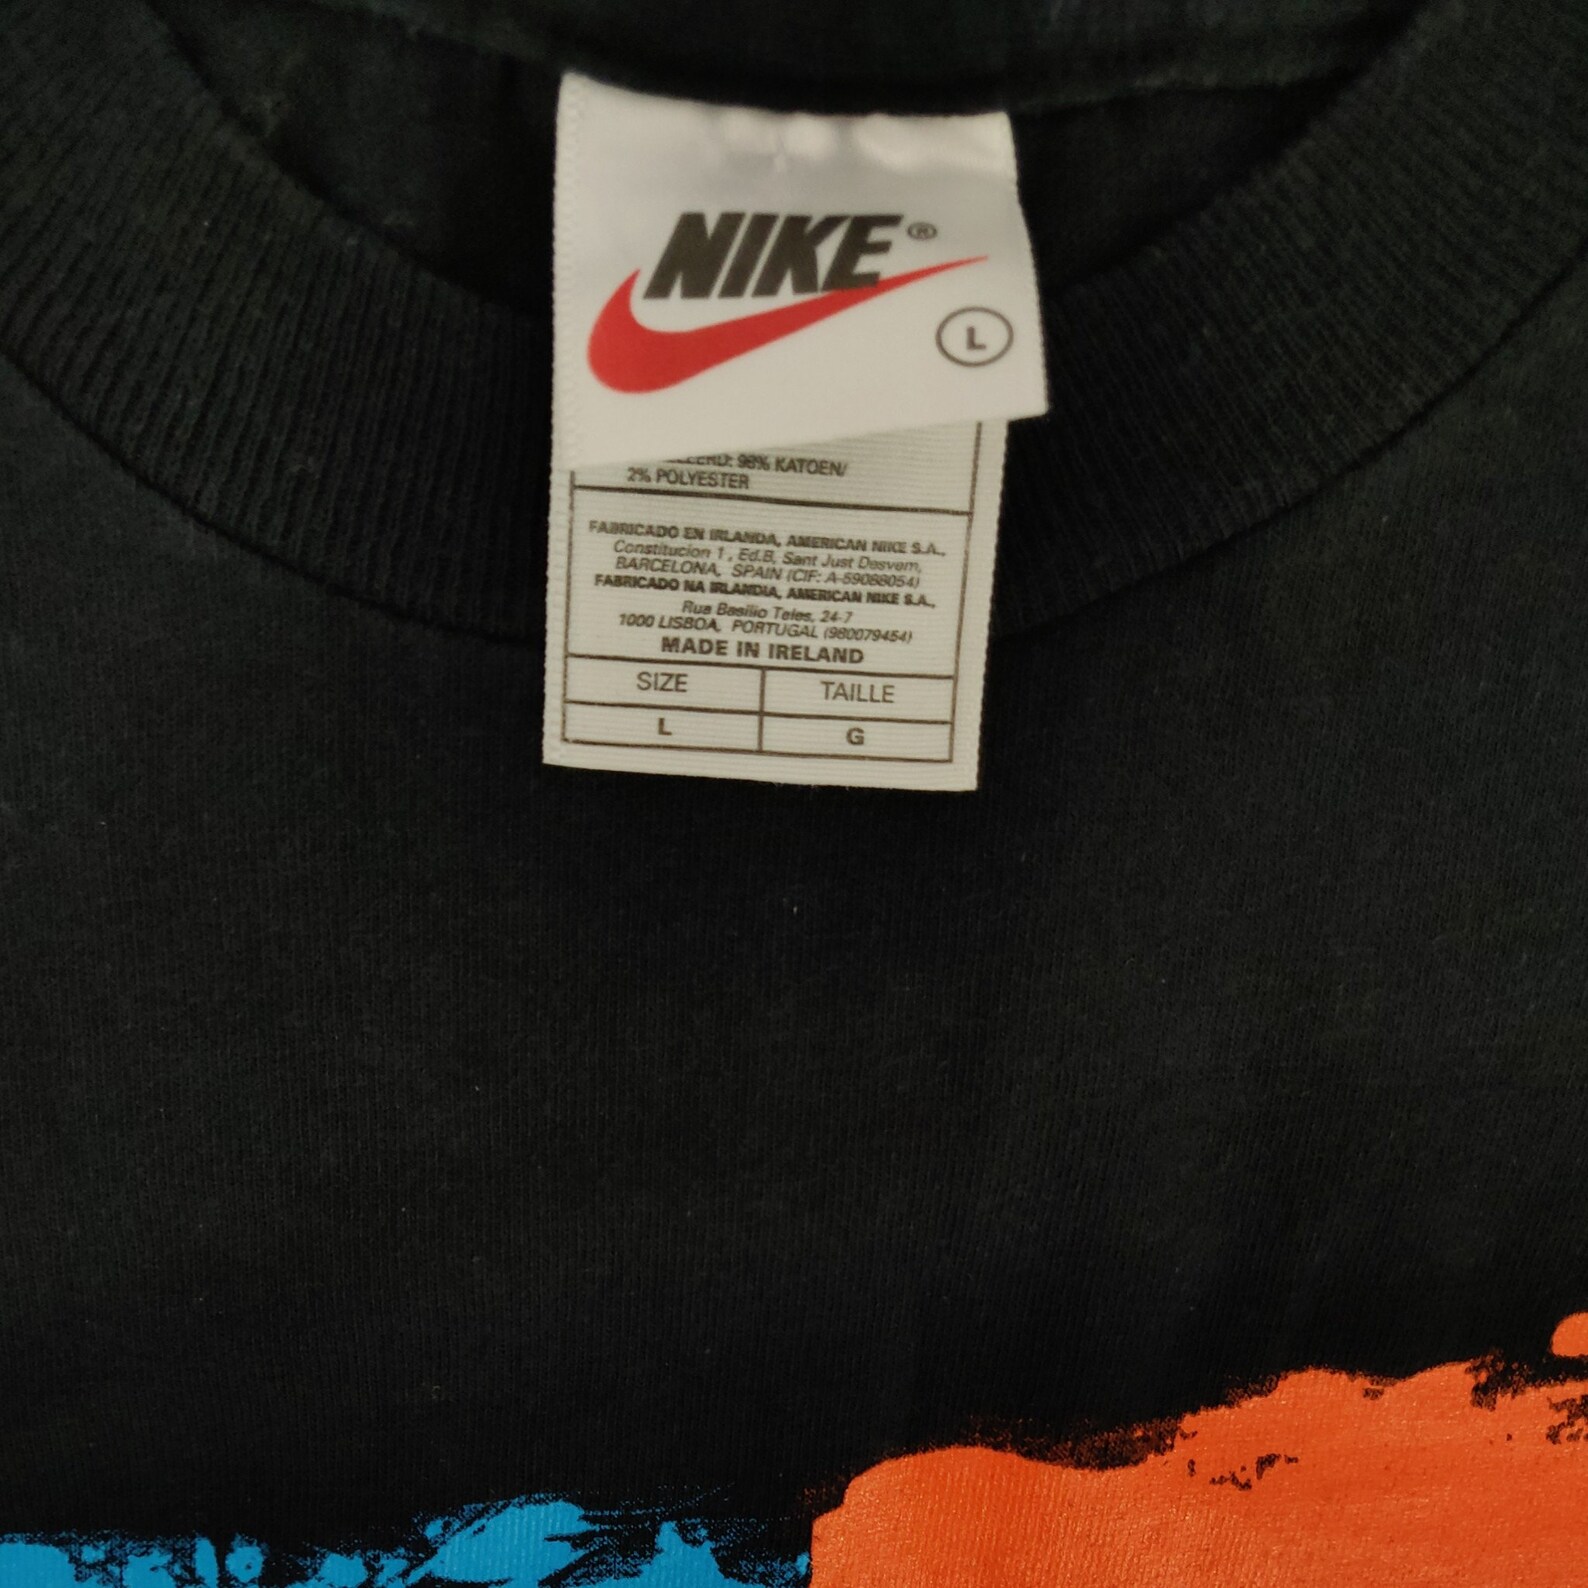 Vintage Nike Shirt 90s black Nike white label t-shirt | Etsy